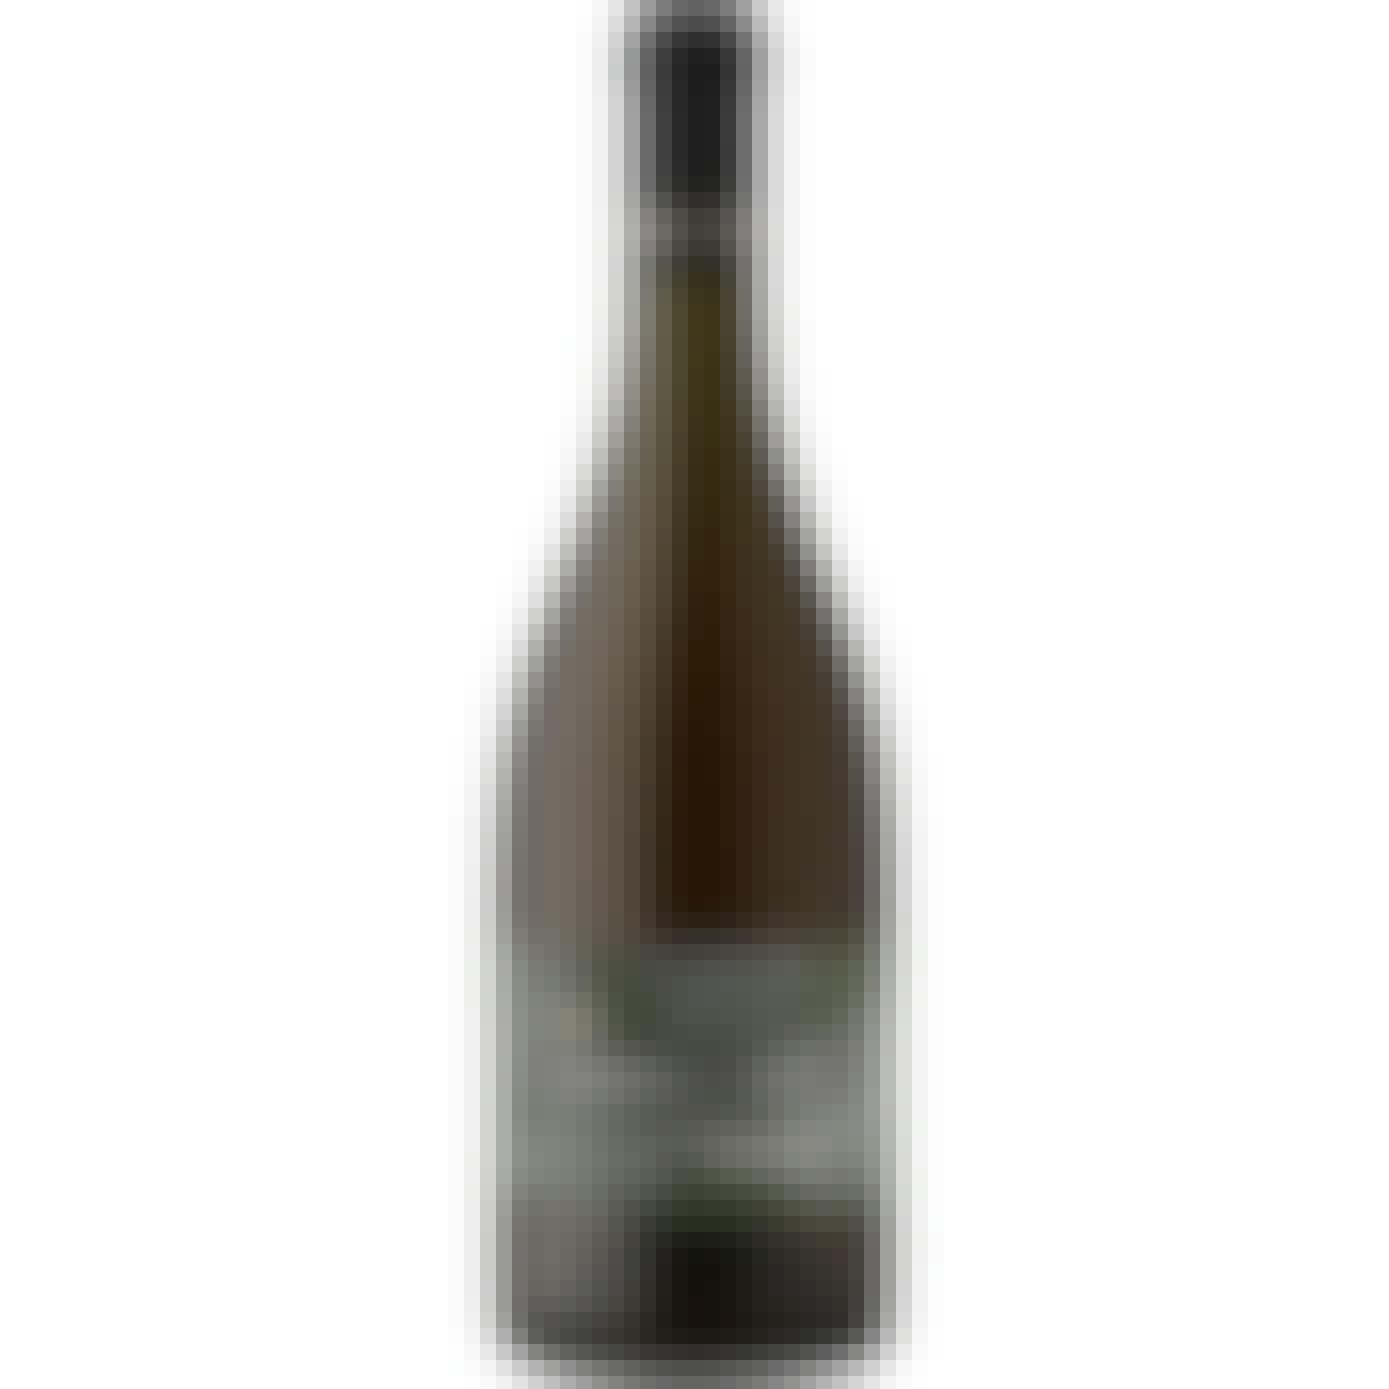 Penner-Ash Willamette Valley Chardonnay 2021 750ml